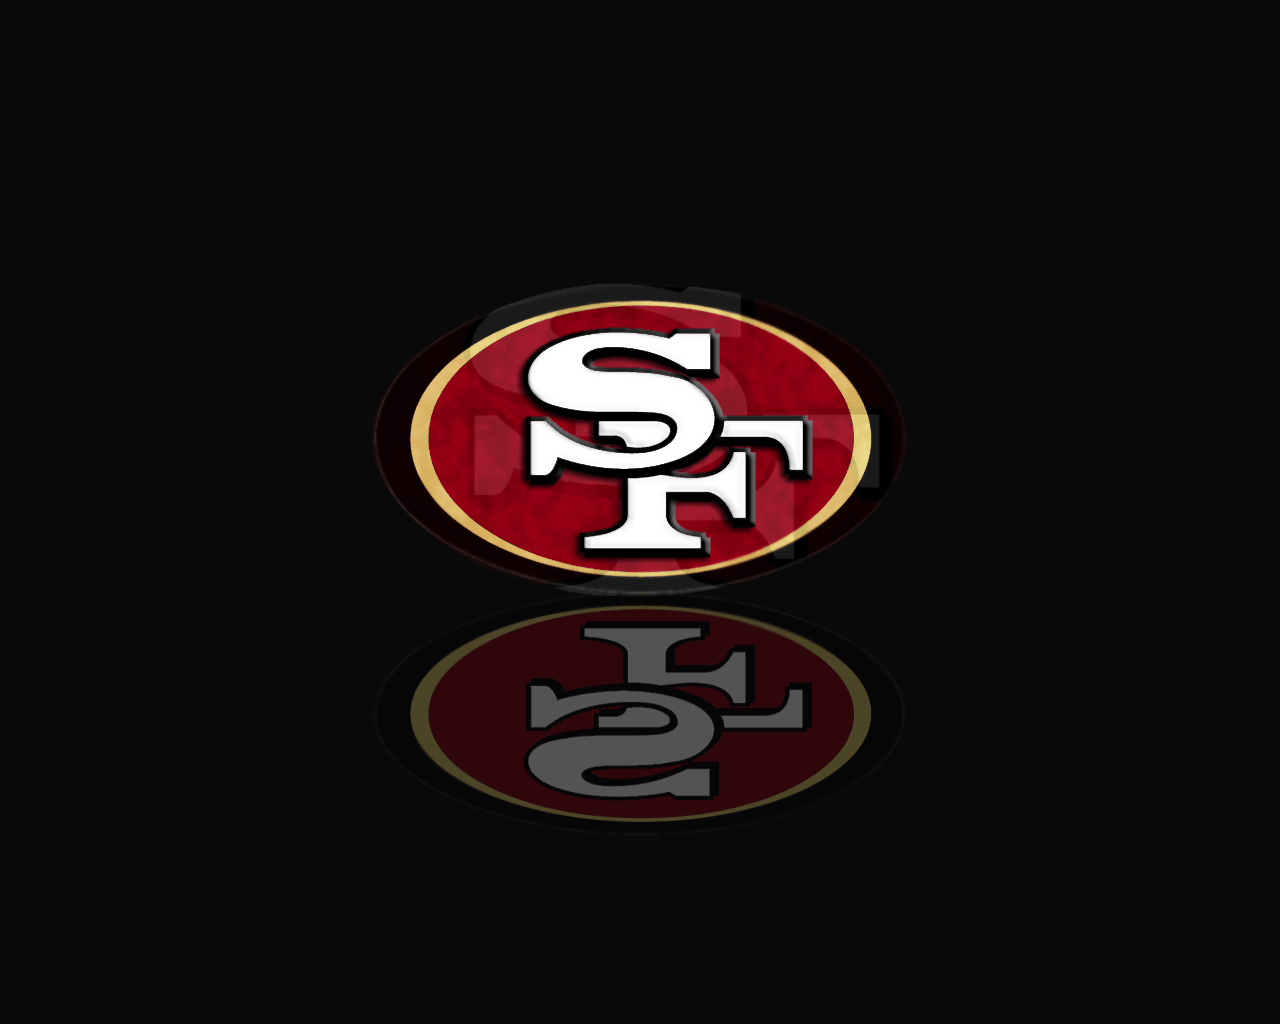 San Francisco 49ers wallpaper. San Francisco 49ers background